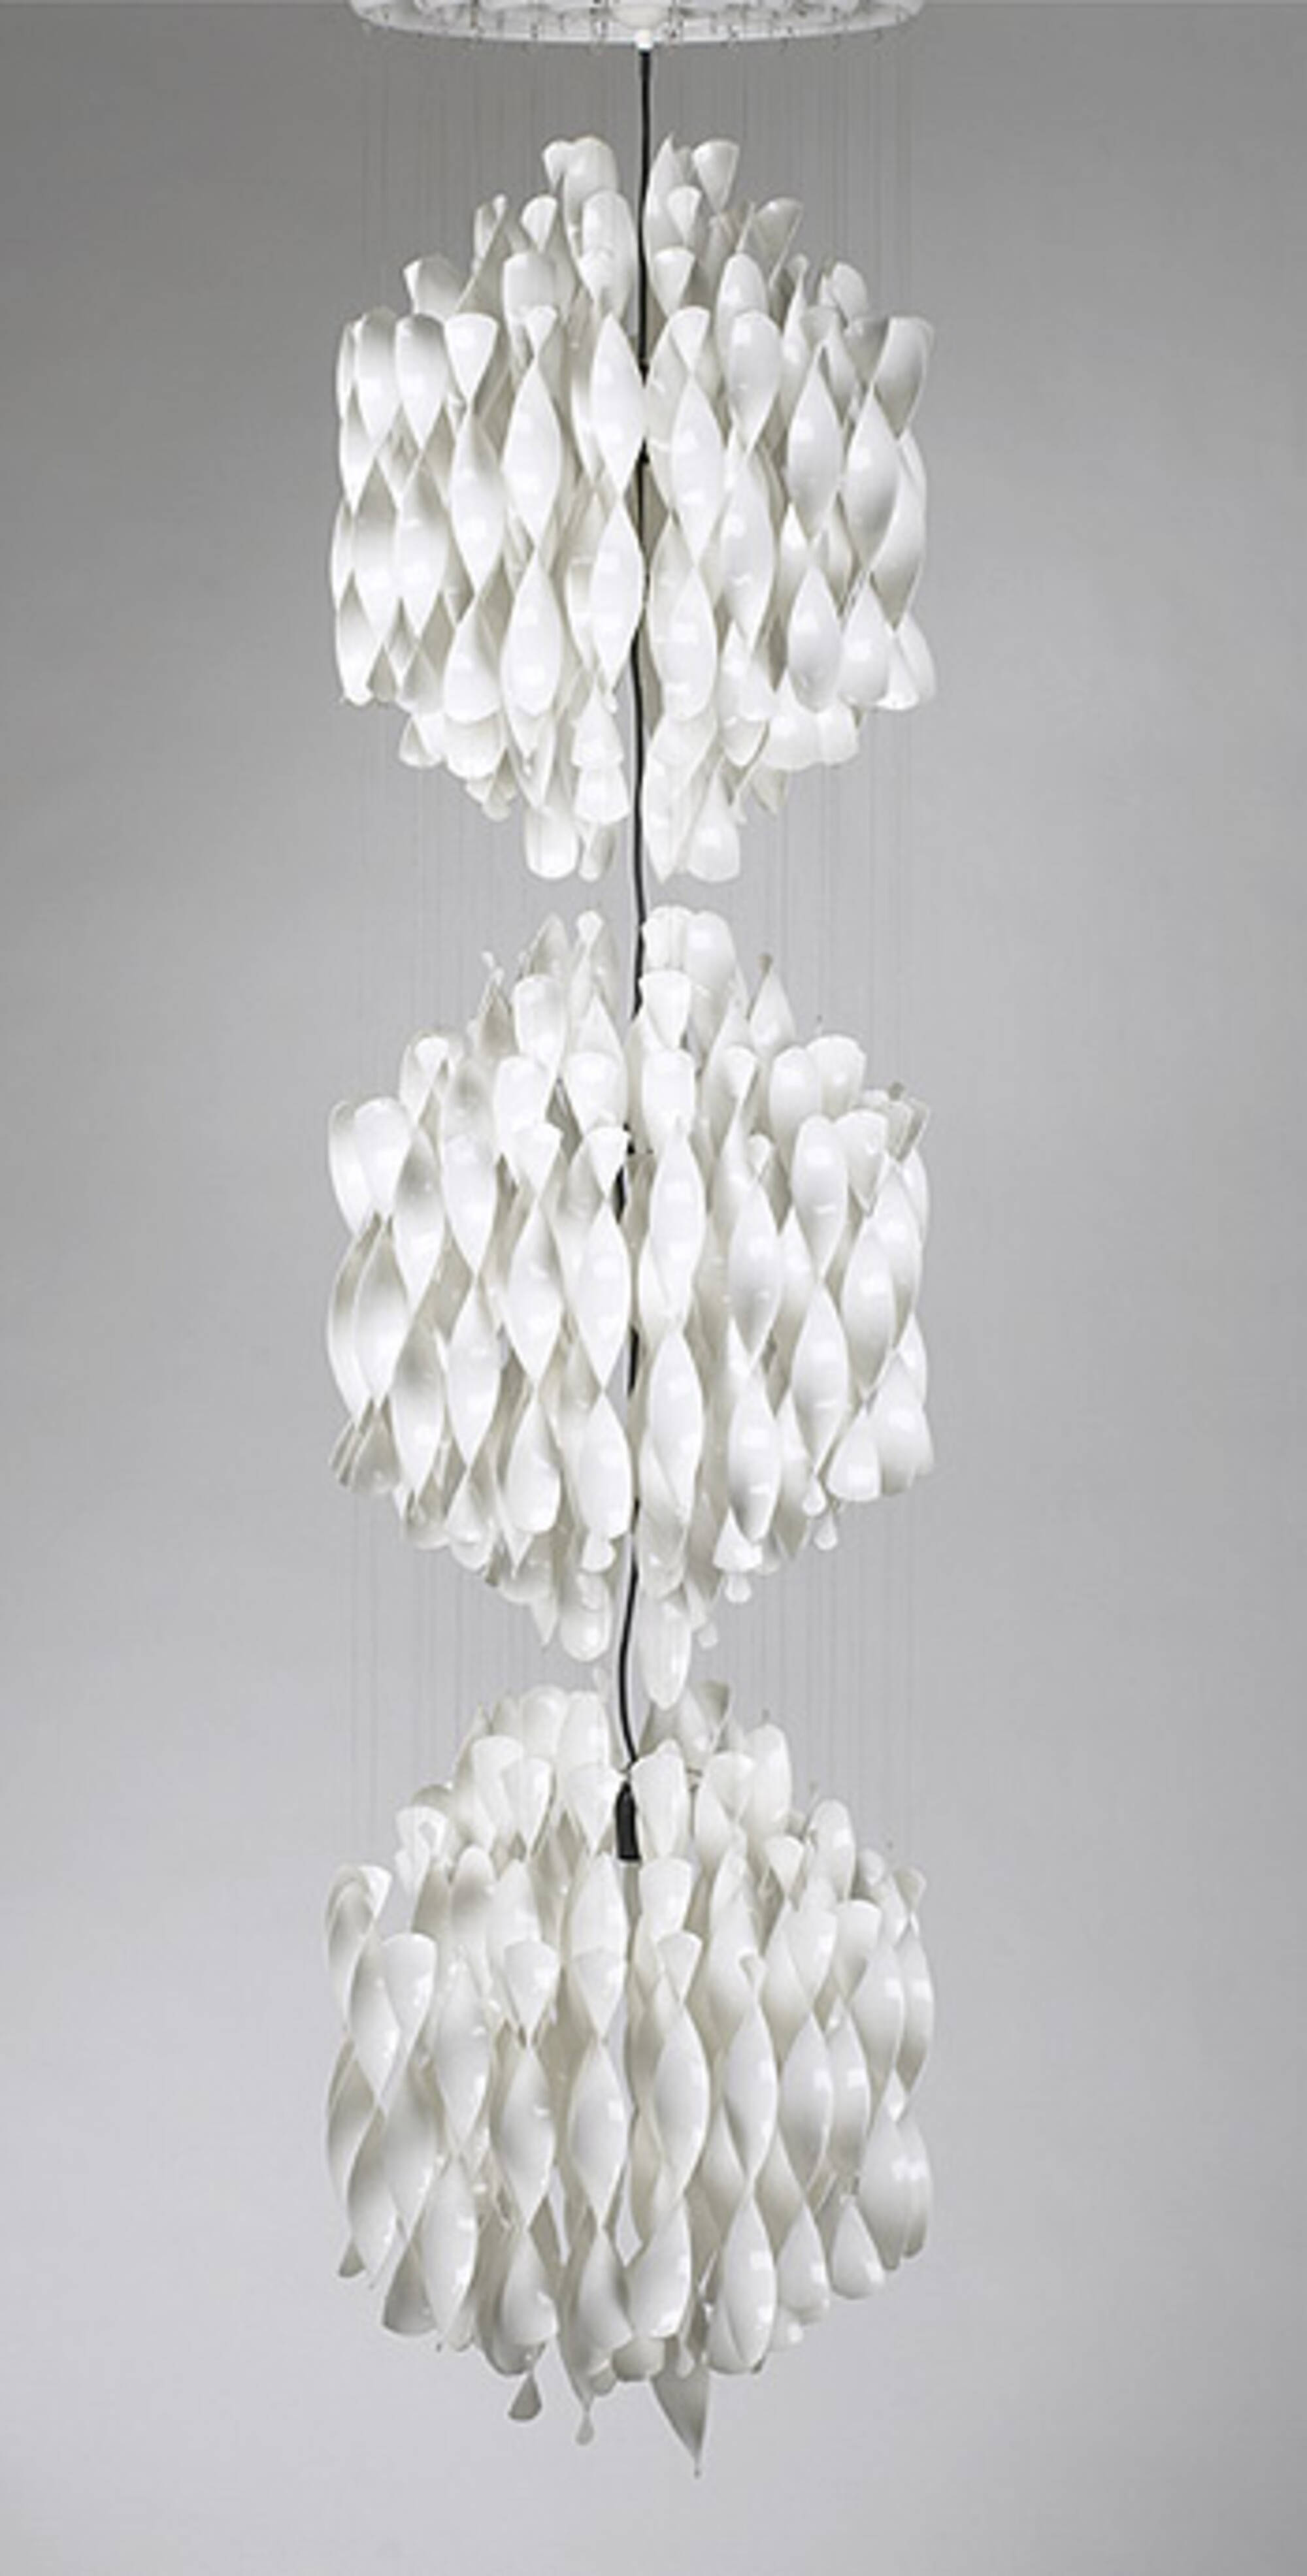 251: VERNER PANTON, SP3 Spiral Lamp < Modernist 20th Century, 8 